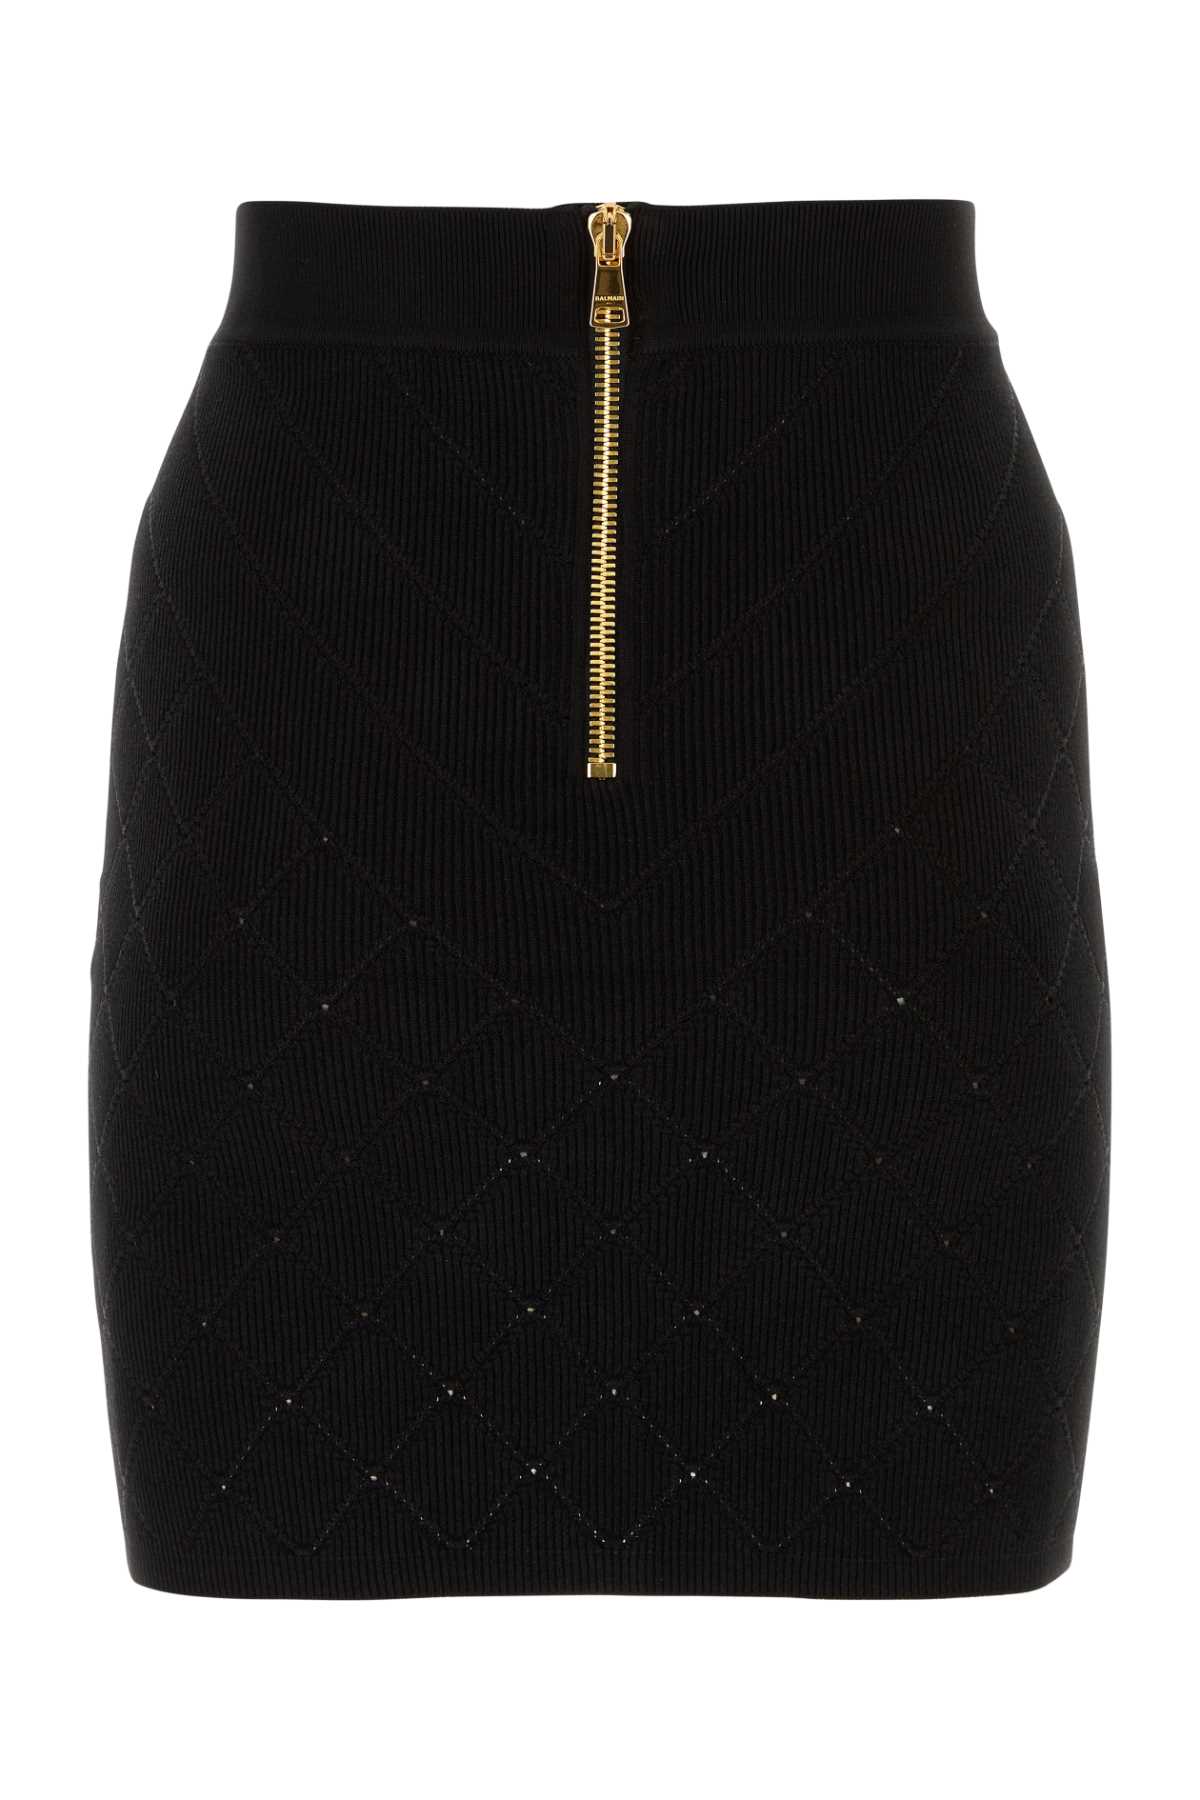 Balmain Black Viscose Blend Mini Skirt In 0panoir